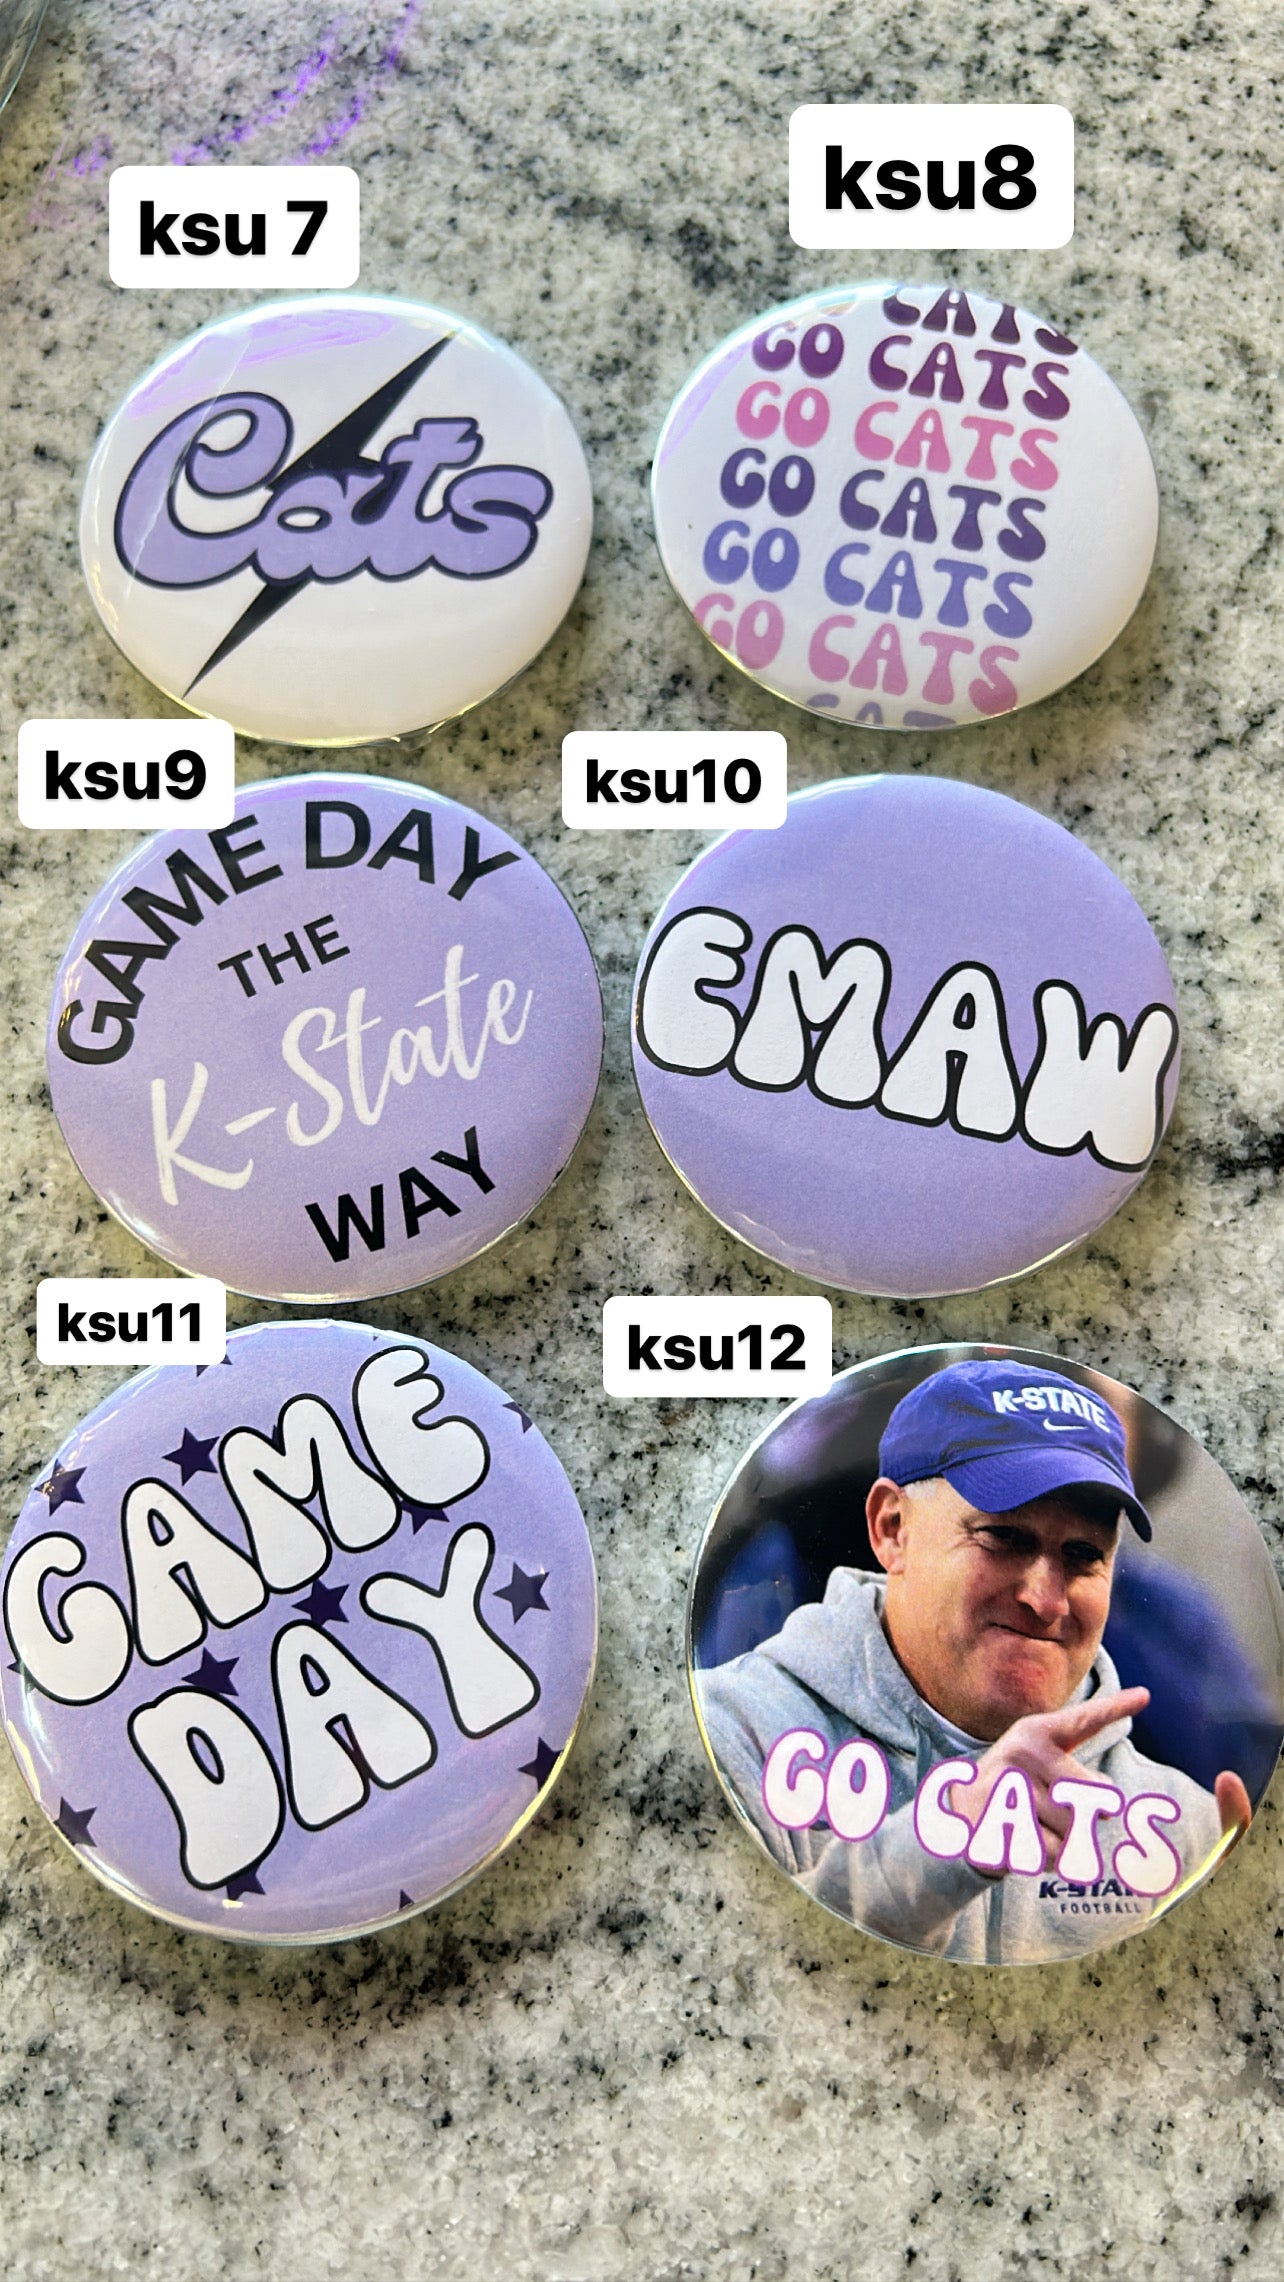 KSU Game day buttons